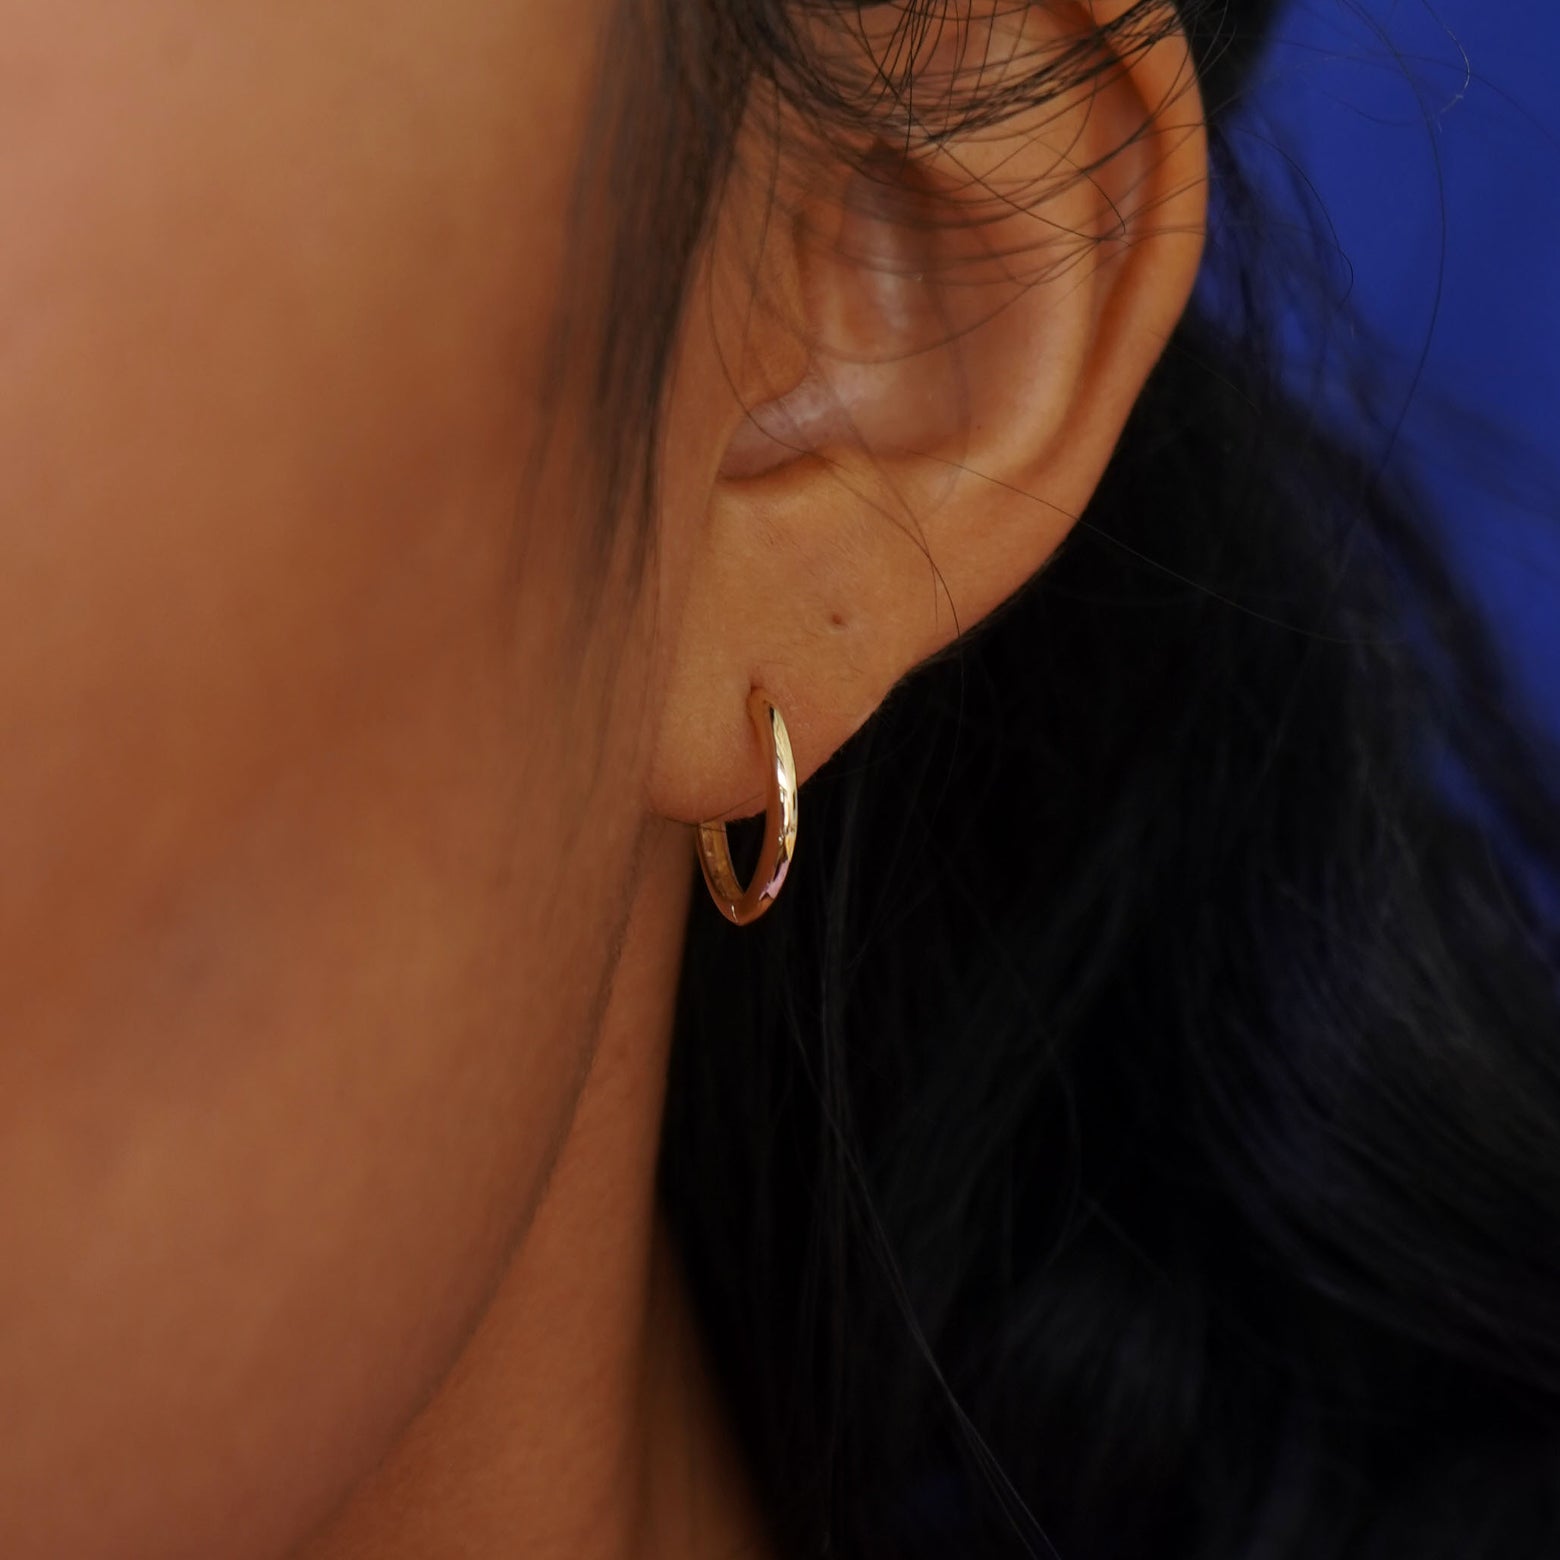 A model's ear wearing a 14k solid gold Medium Curvy Huggie Hoop